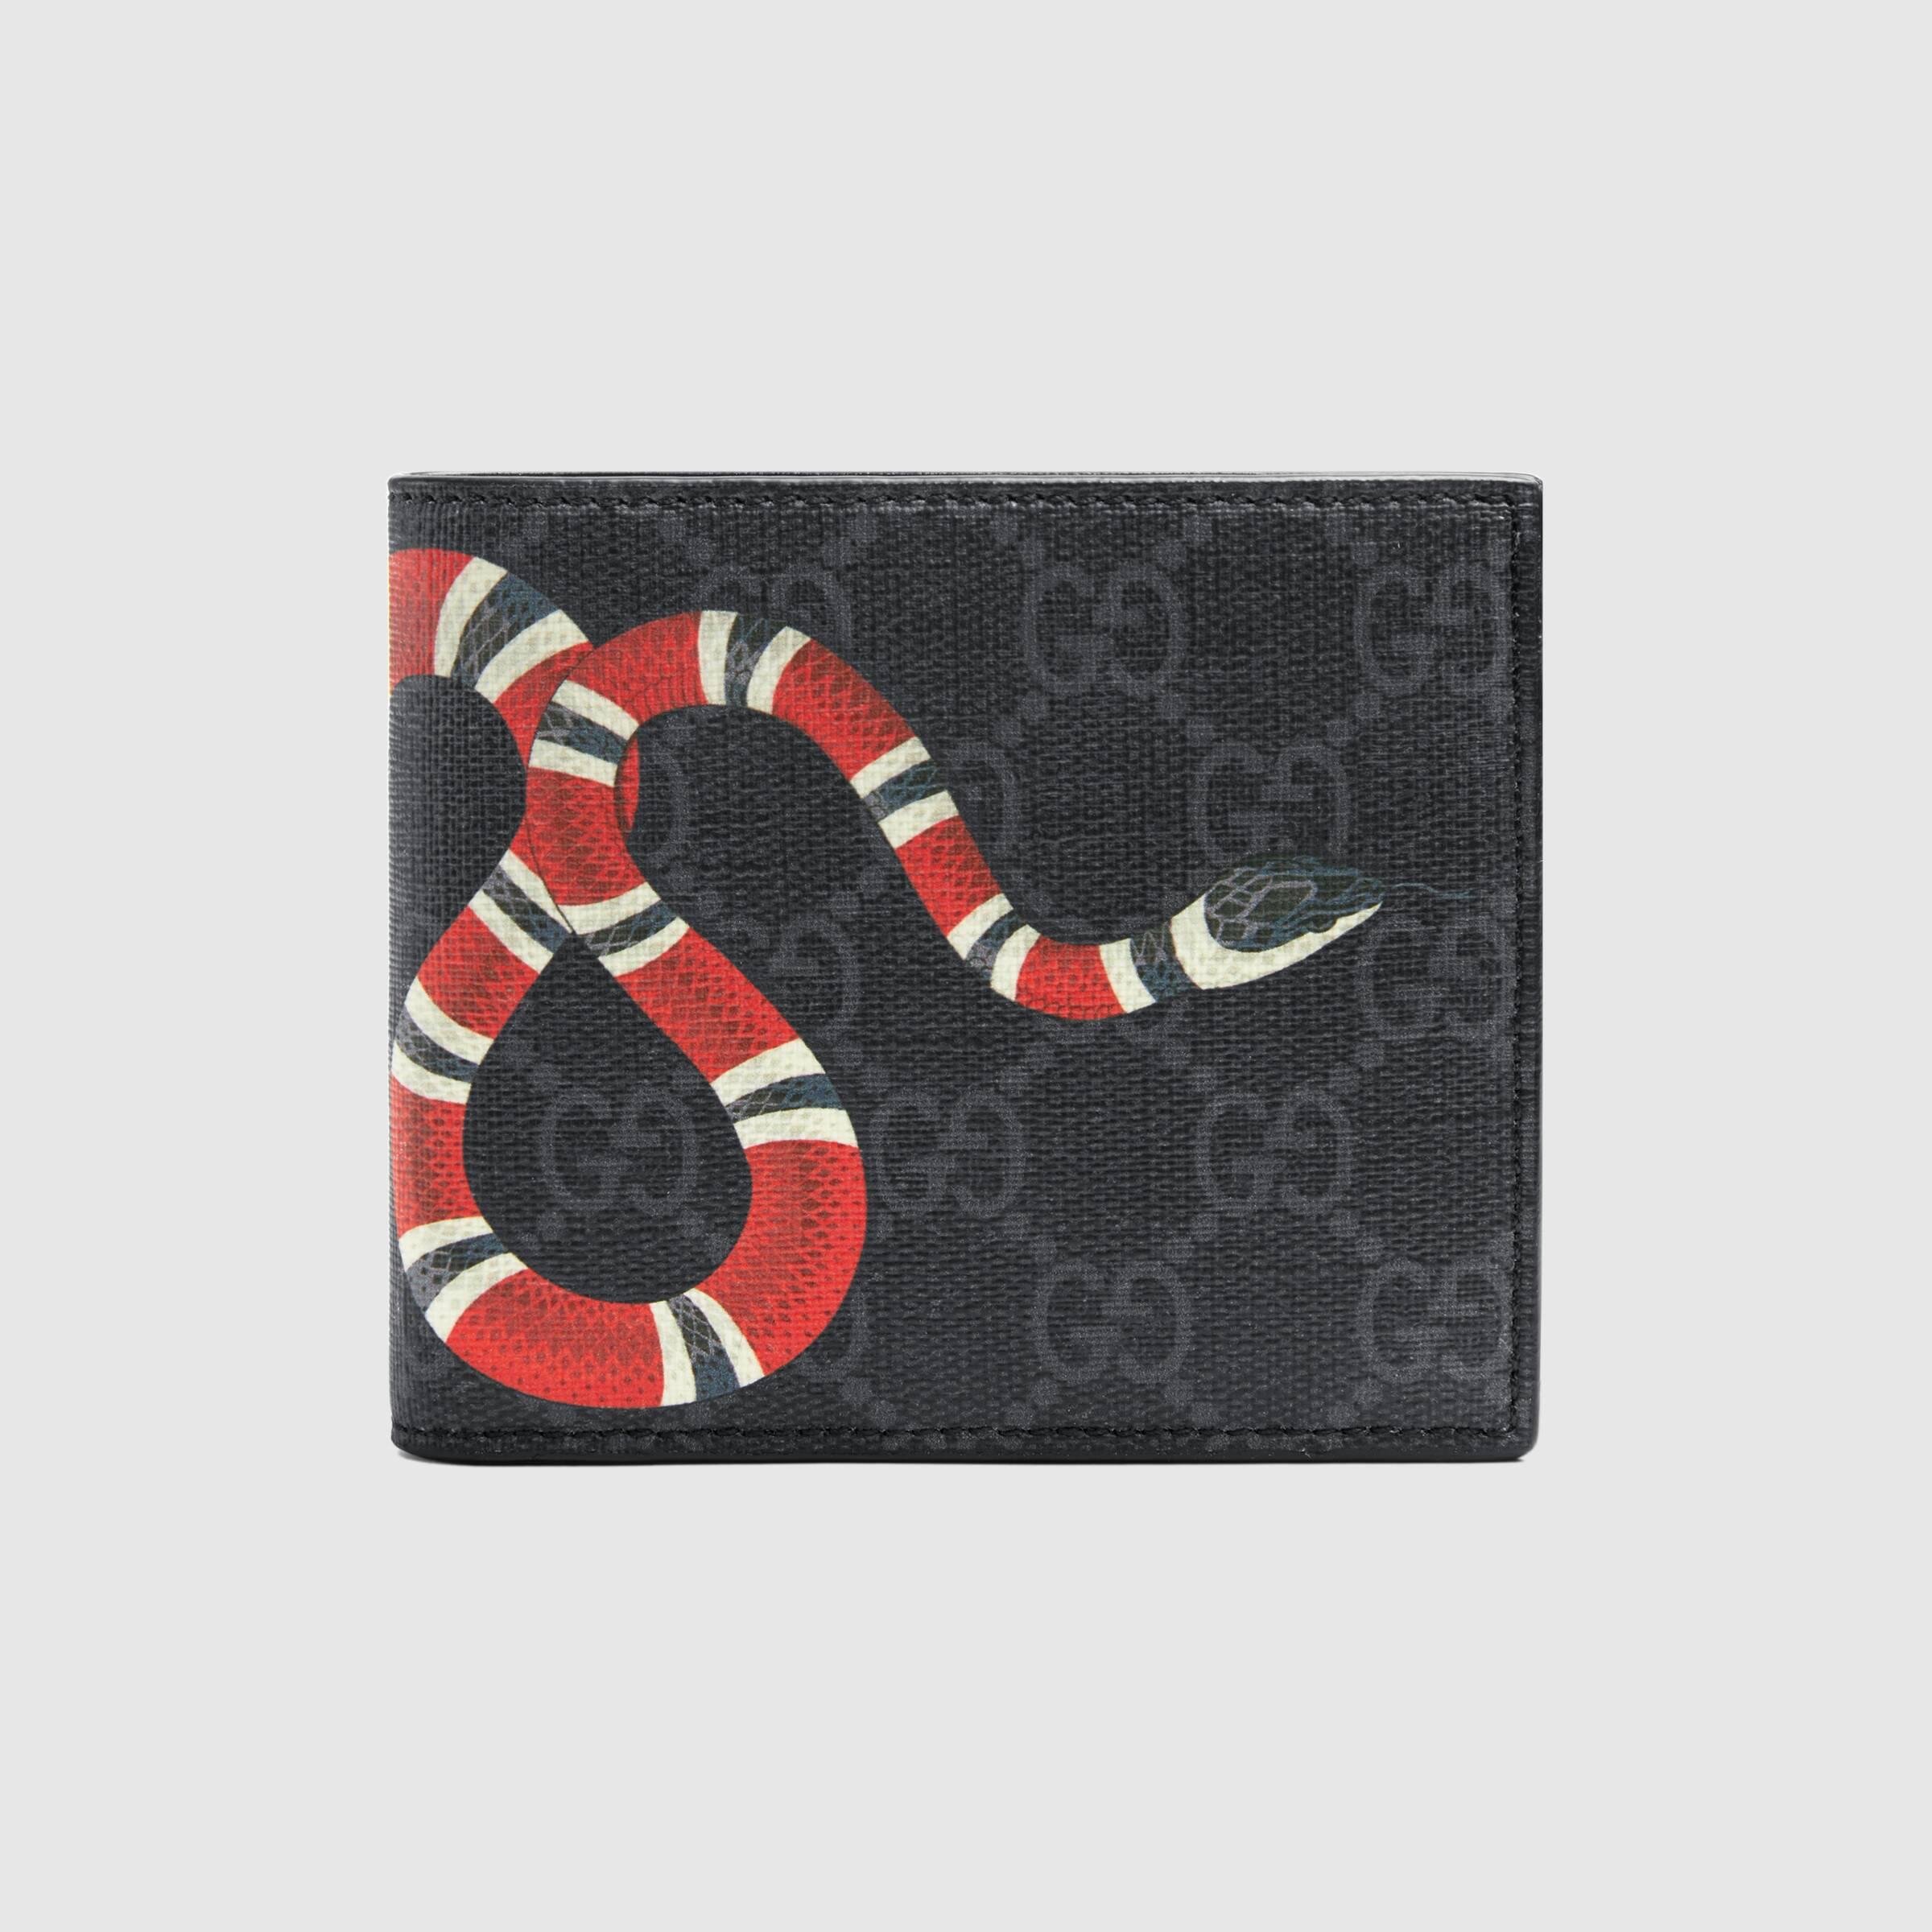 Gucci Leather Kingsnake Print GG Supreme Wallet in Black for Men - Save 26% - Lyst